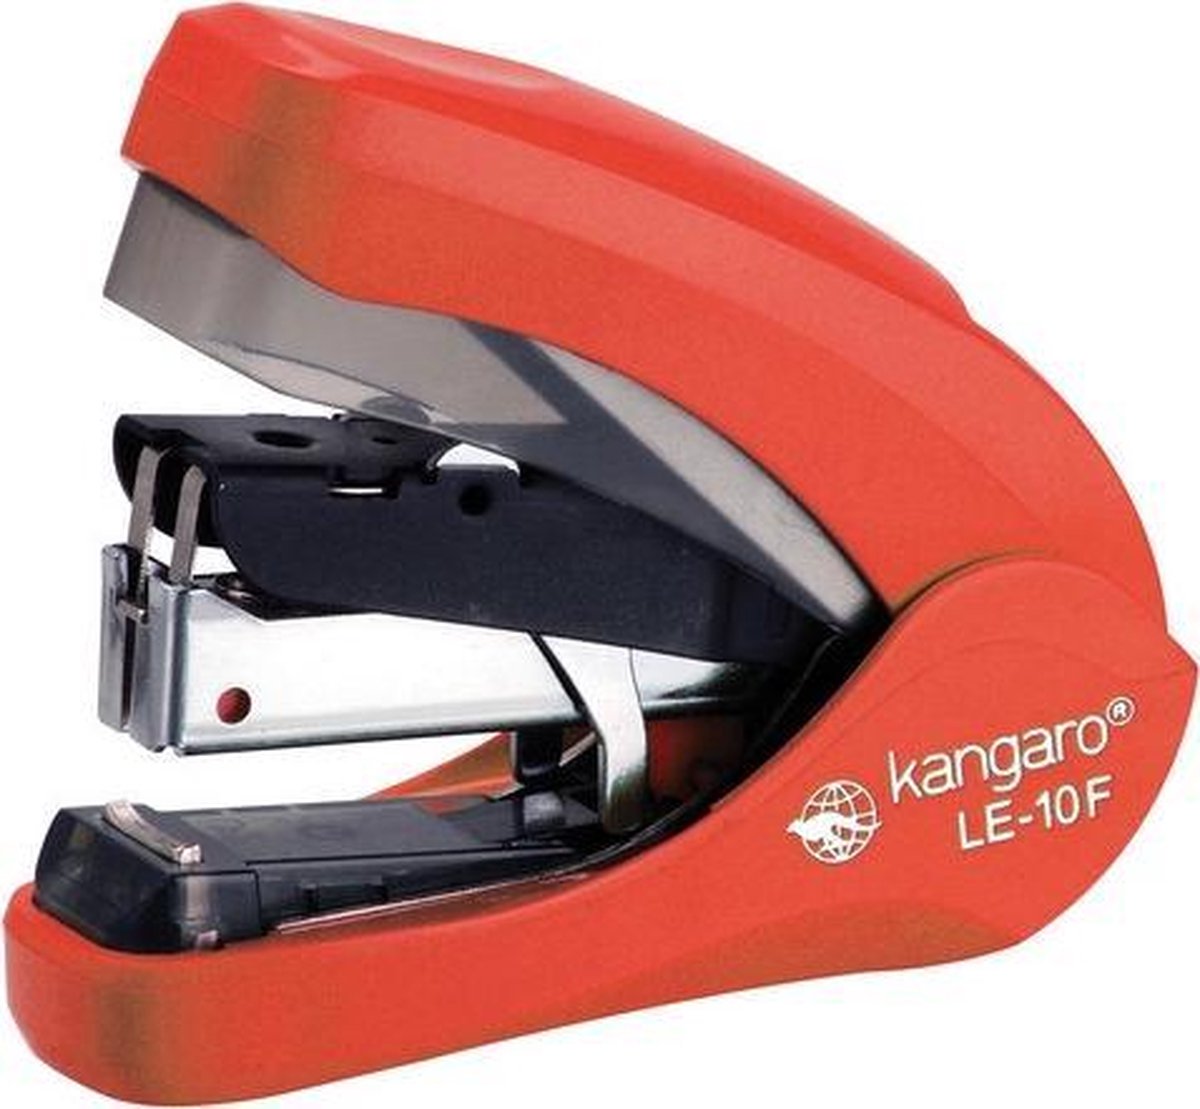 Kangaro Nietmachine LE-10F rood flat clinch